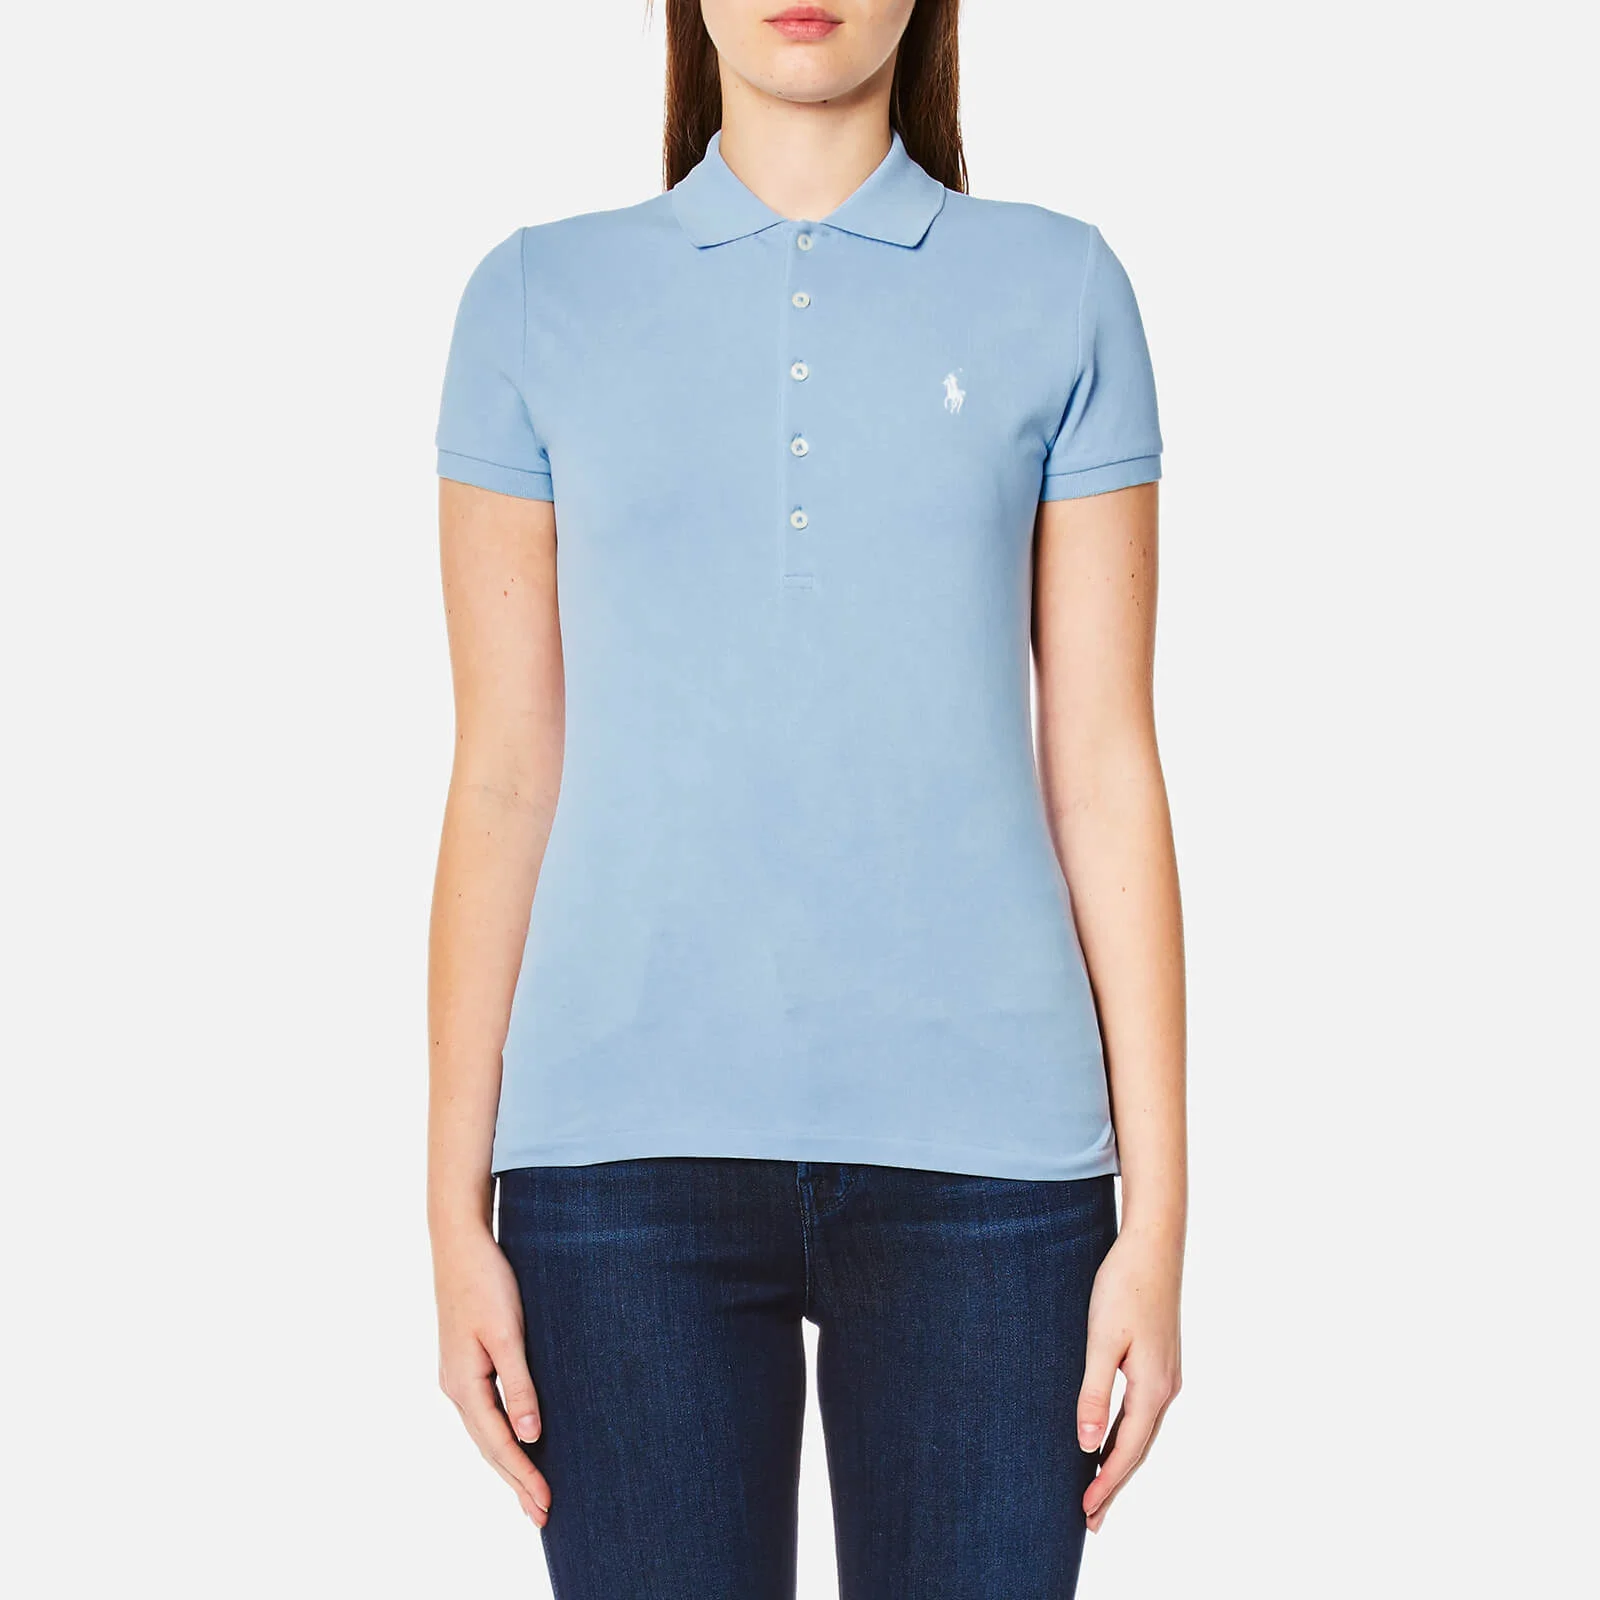 Polo Ralph Lauren Women's Julie Polo Shirt - Sterling Blue Image 1